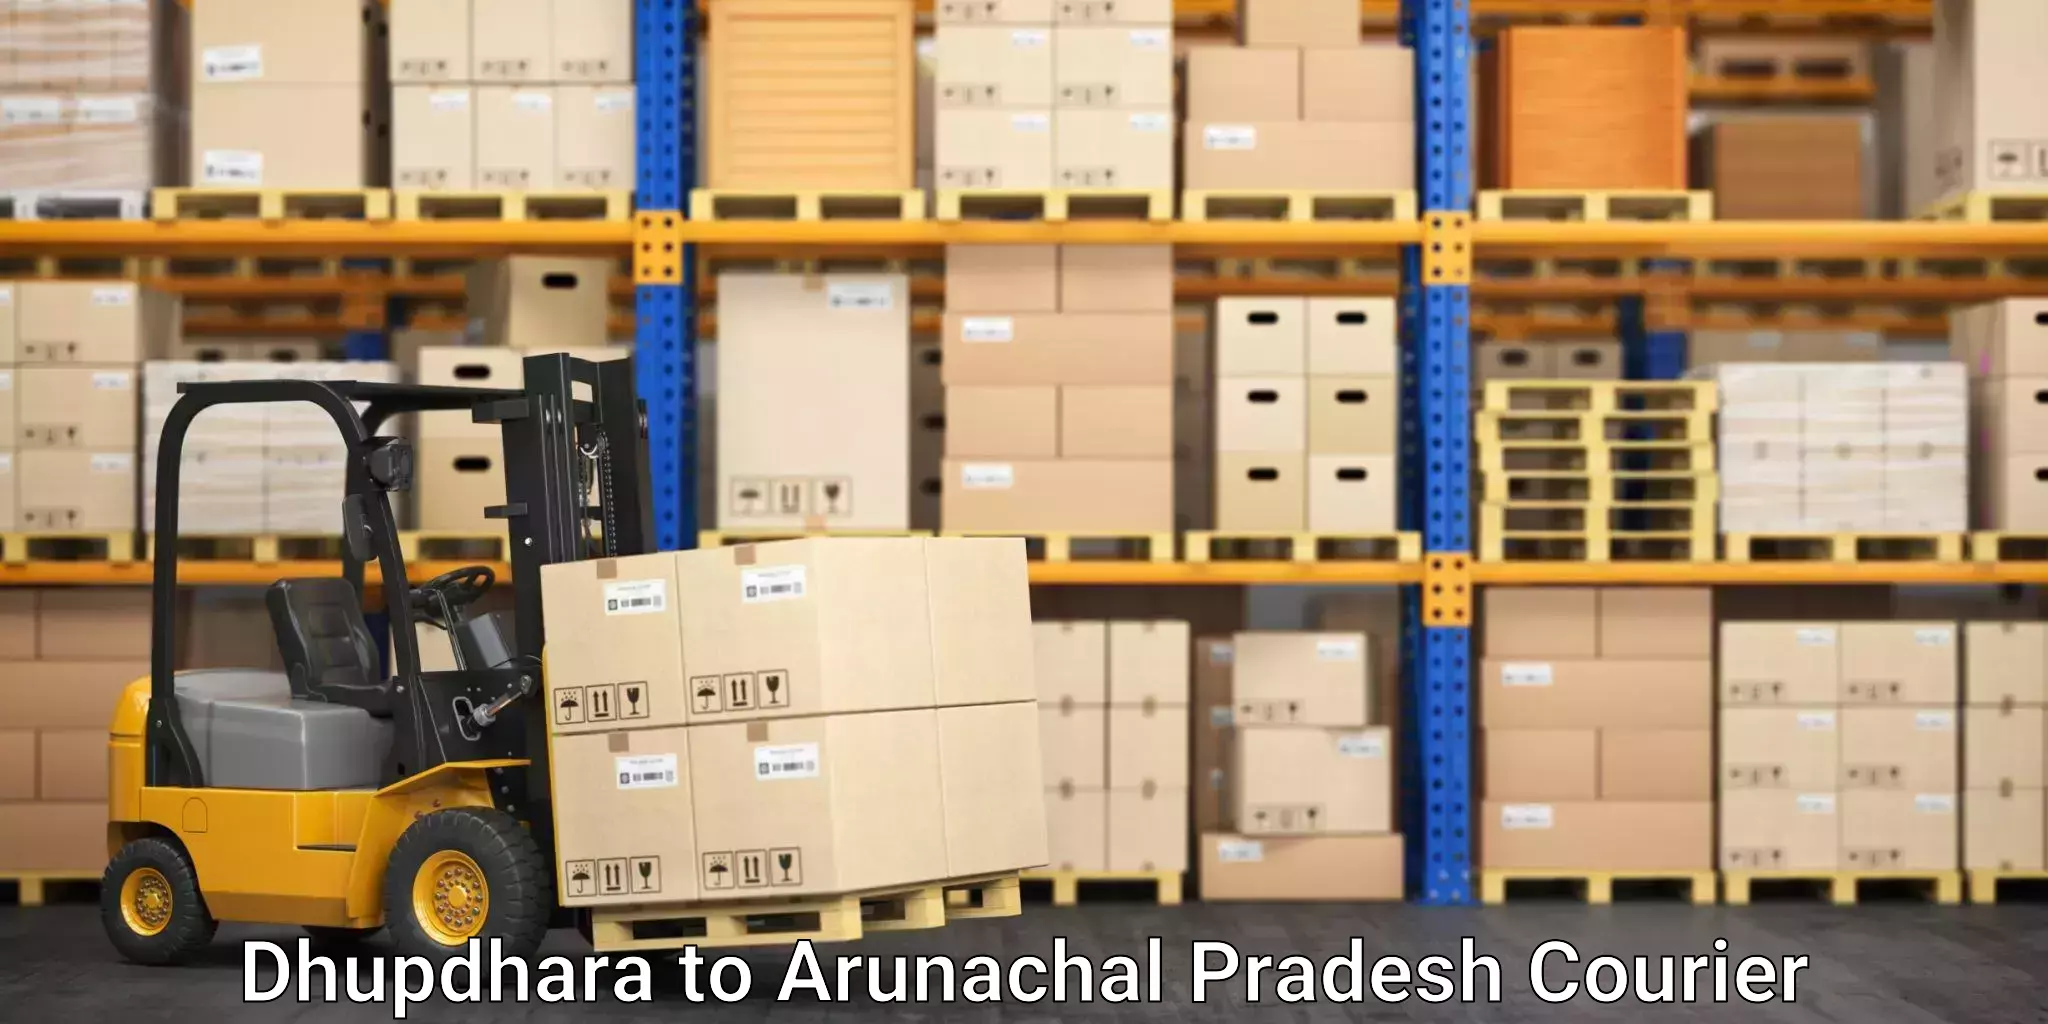 Package delivery network Dhupdhara to Arunachal Pradesh